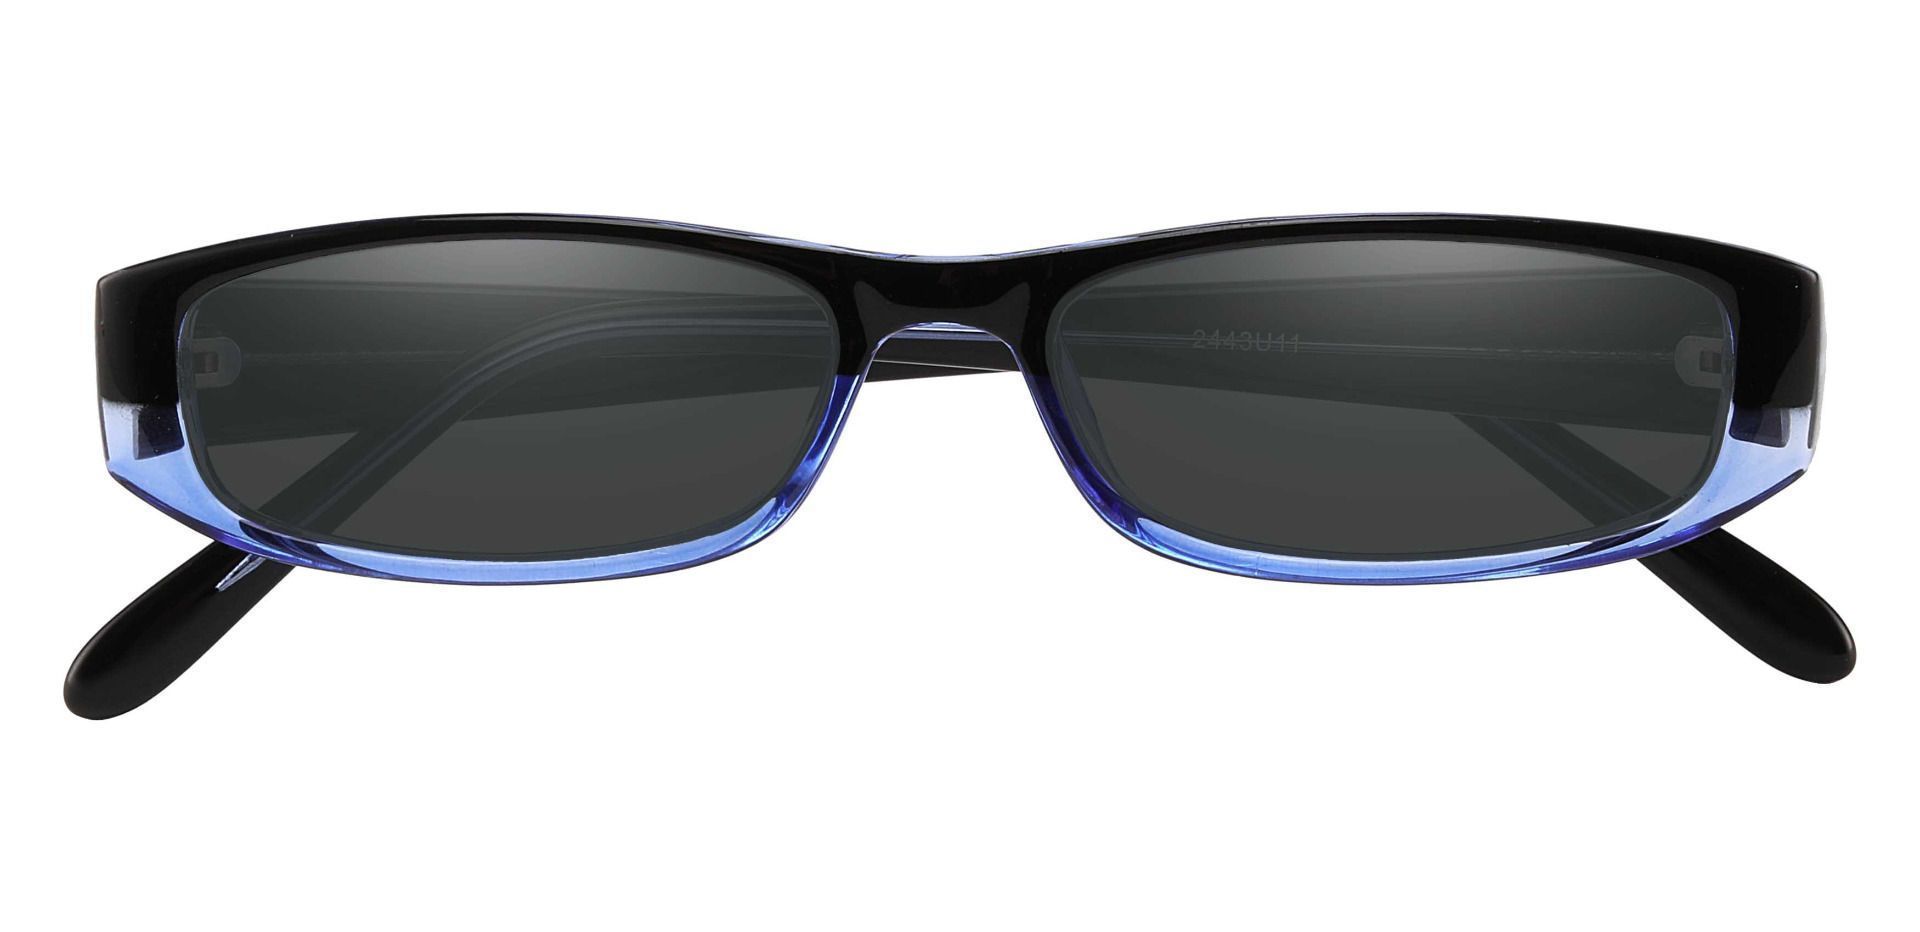 Elgin Rectangle Single Vision Sunglasses - Blue Frame With Gray Lenses